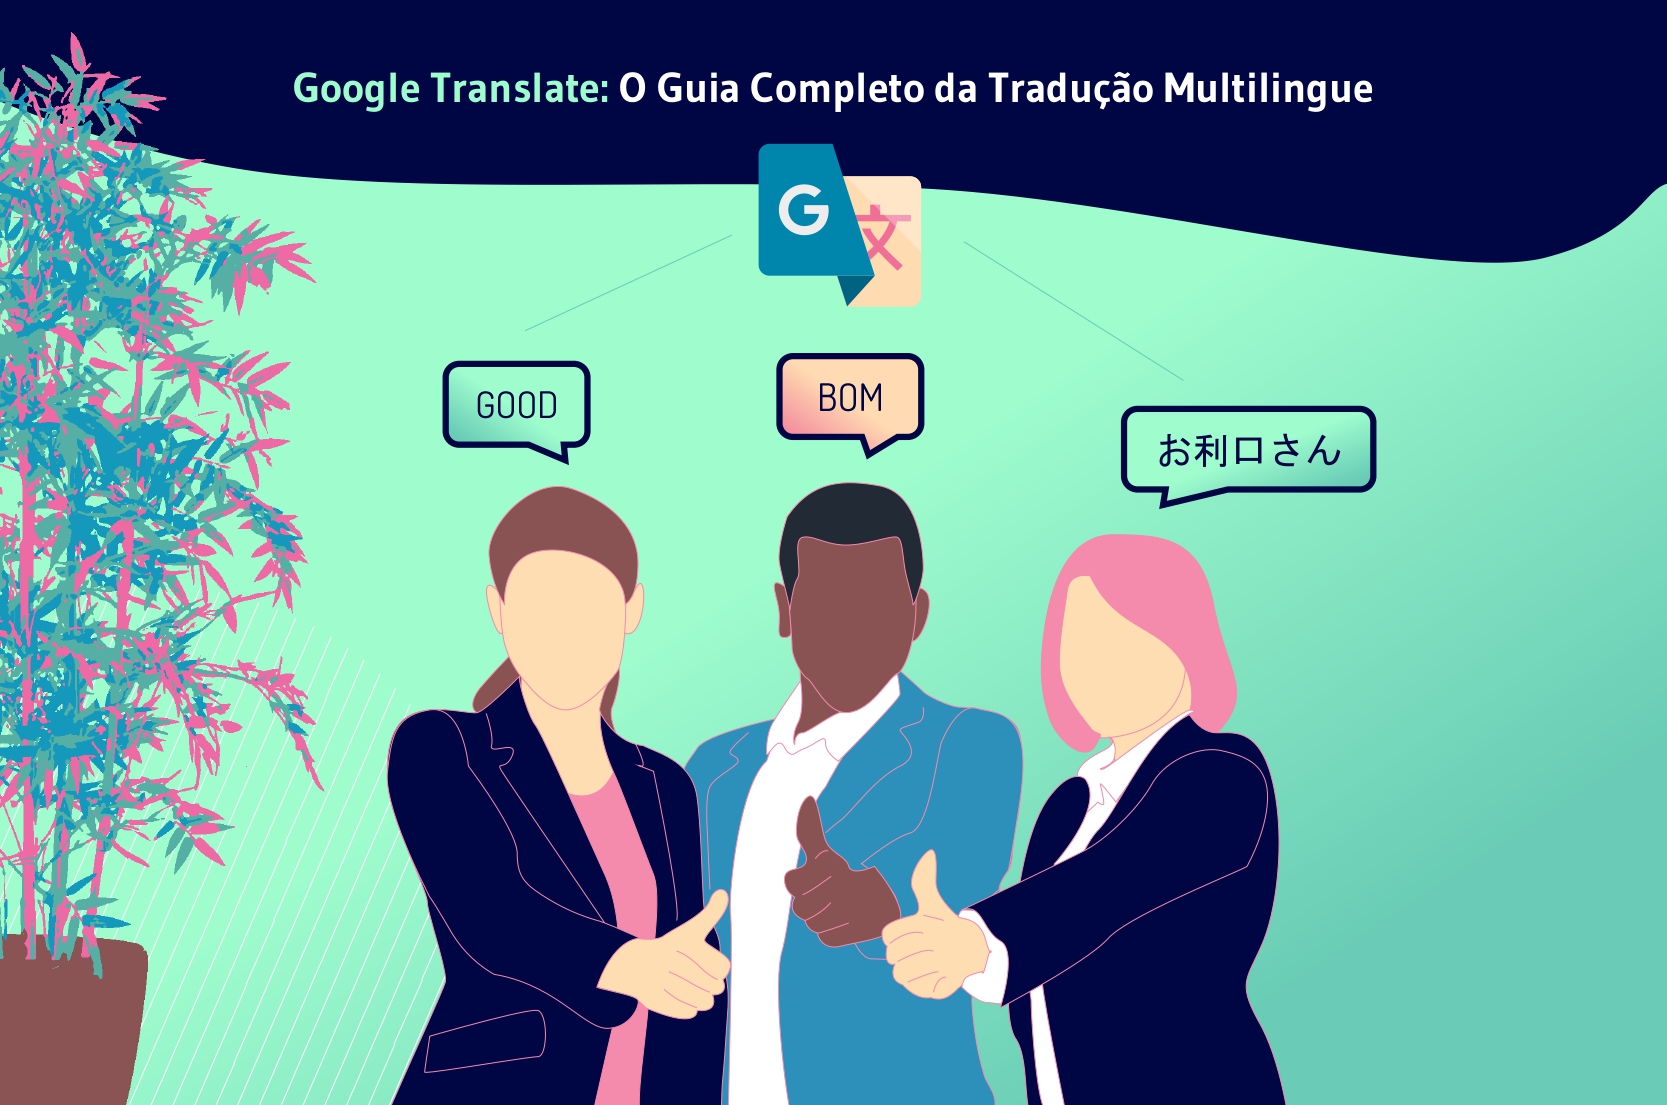 Google translate : O Guia Completo da Traduçao Multilingue